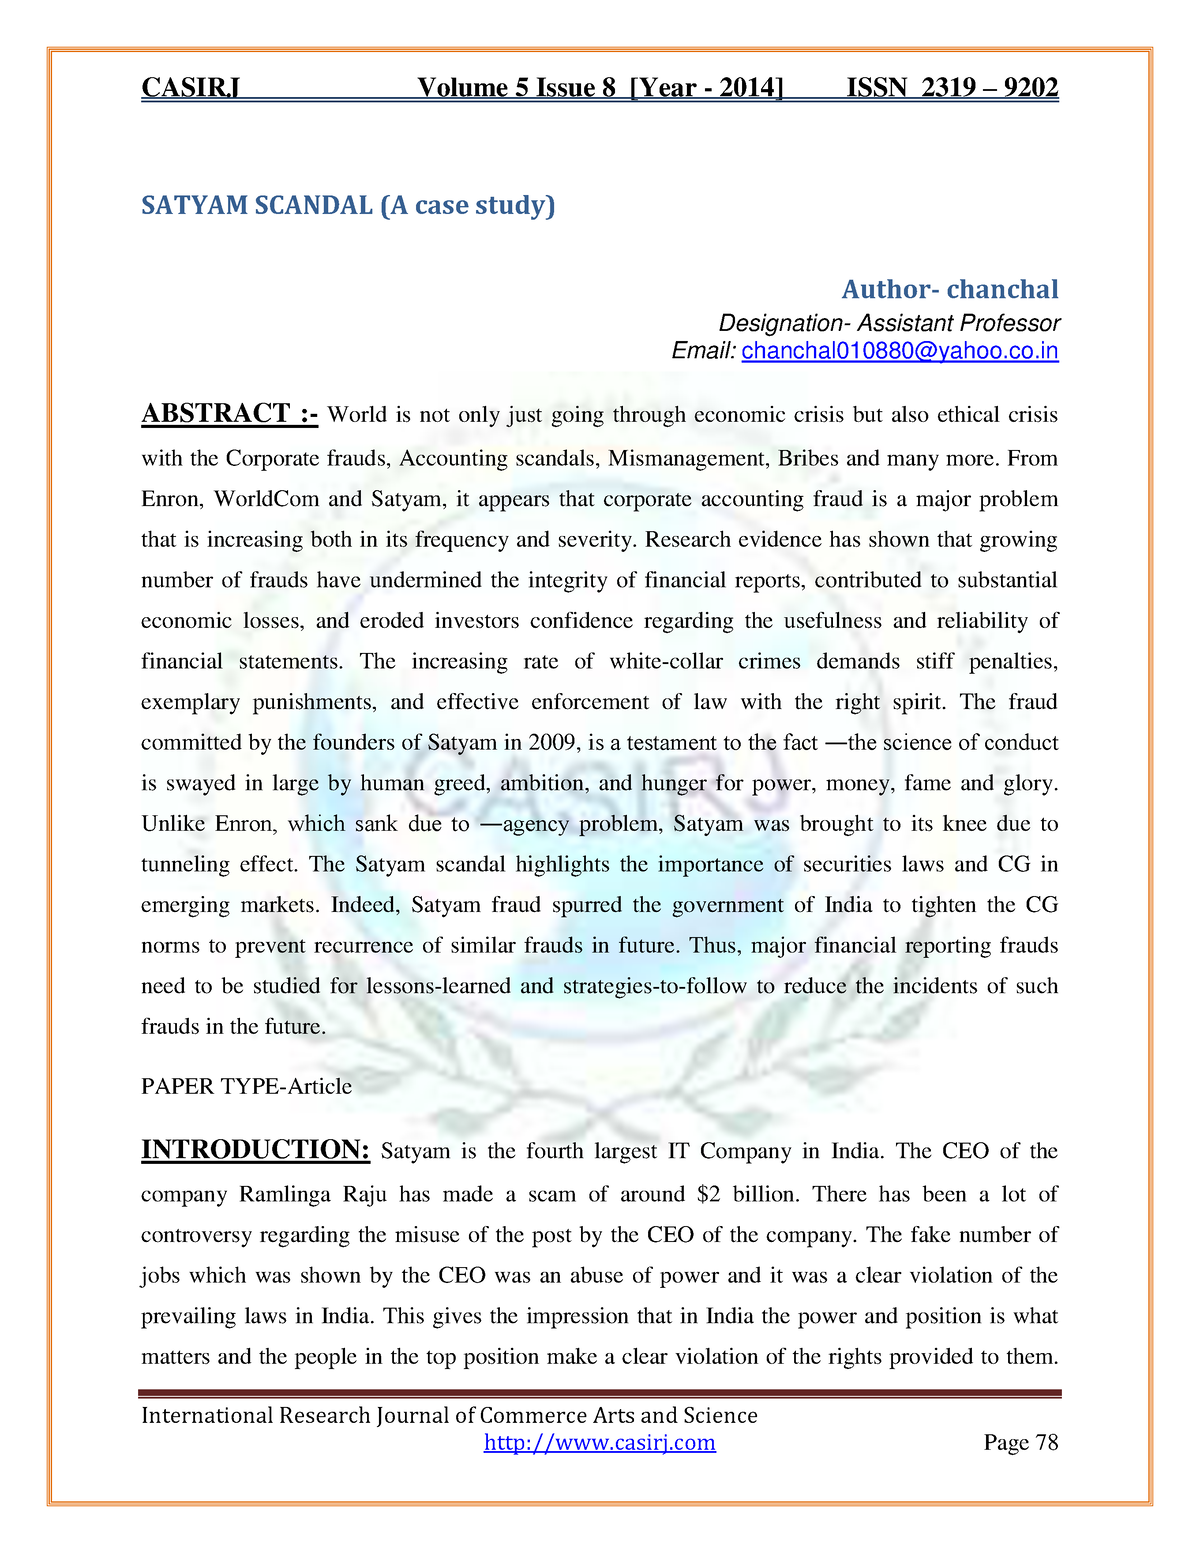 case study on satyam scandal.pdf